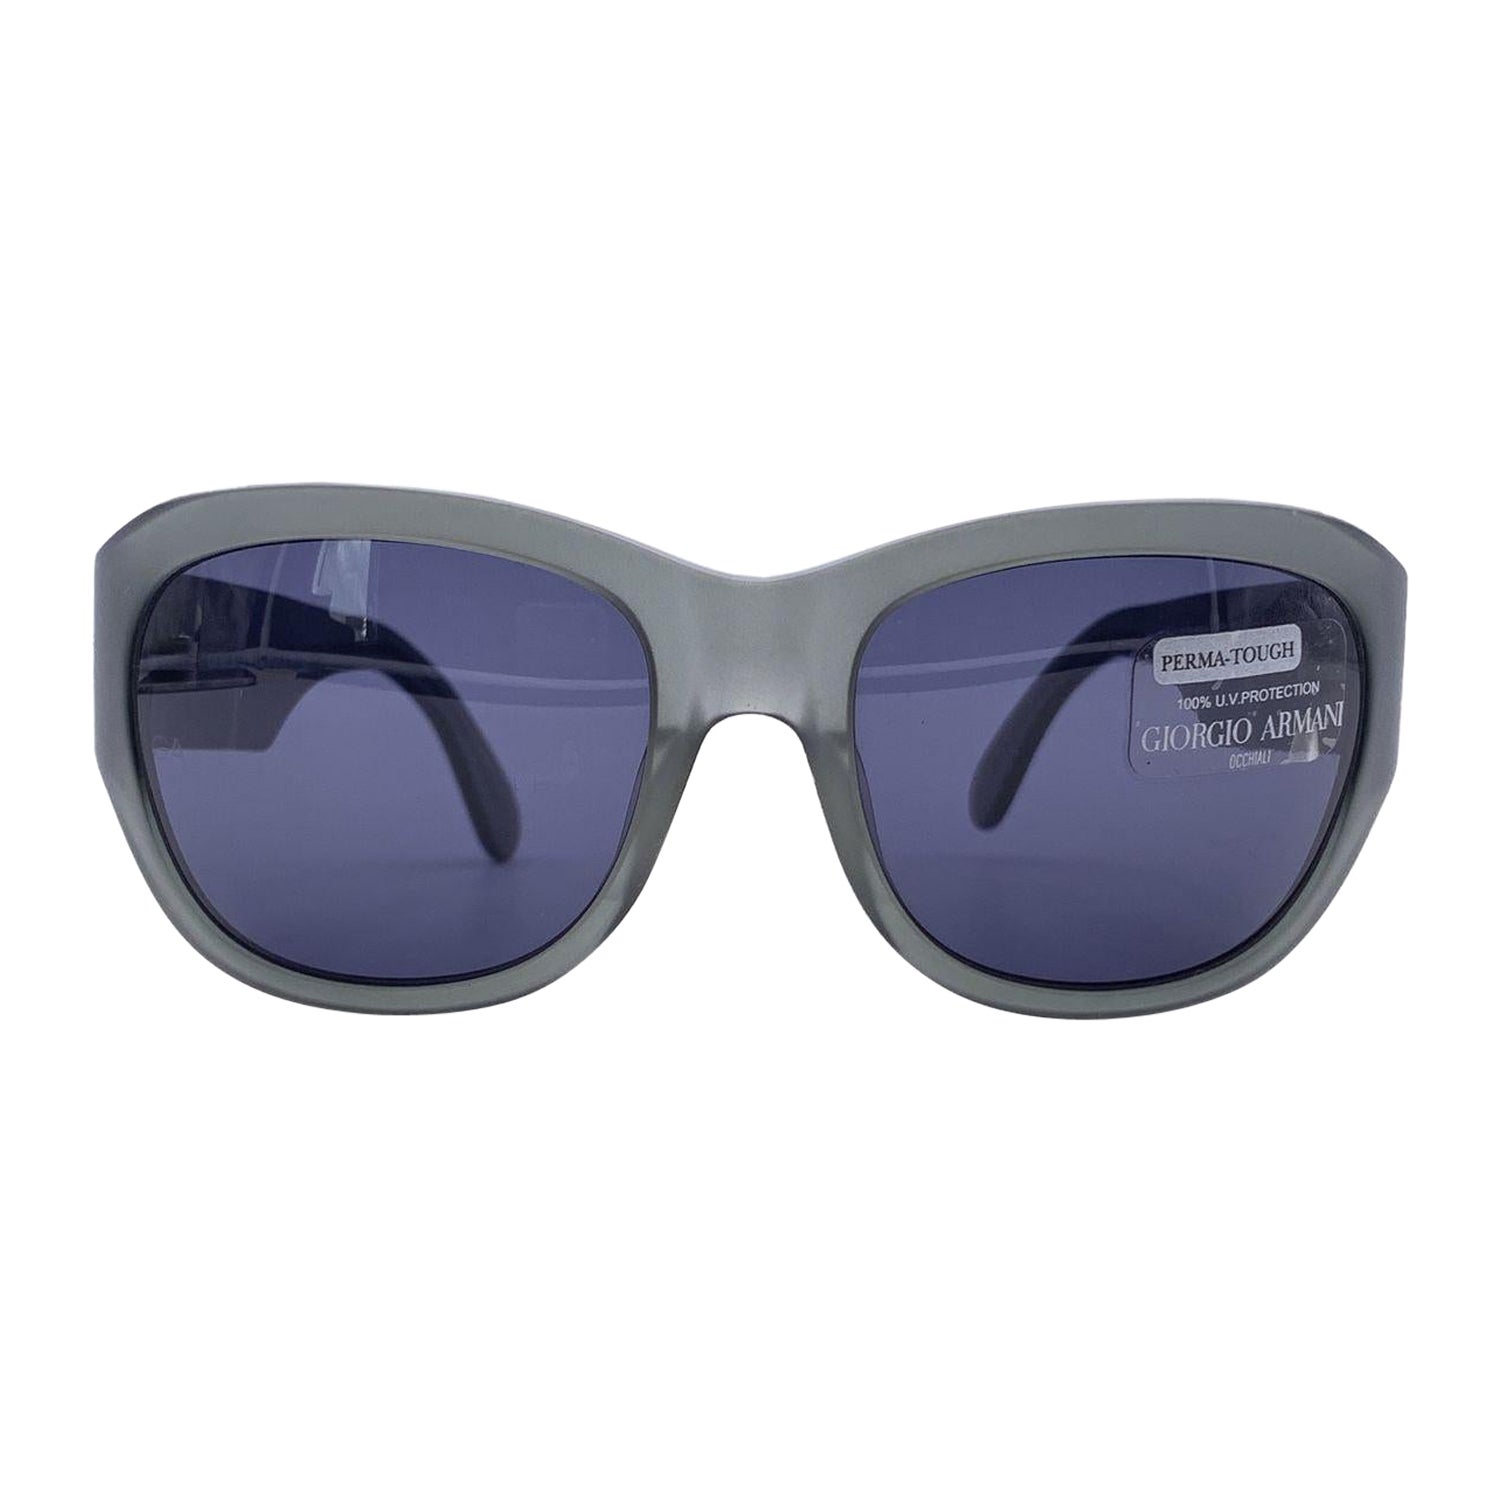 Giorgio Armani Vintage Grey Perma Tough Sunglasses 842 125 mm